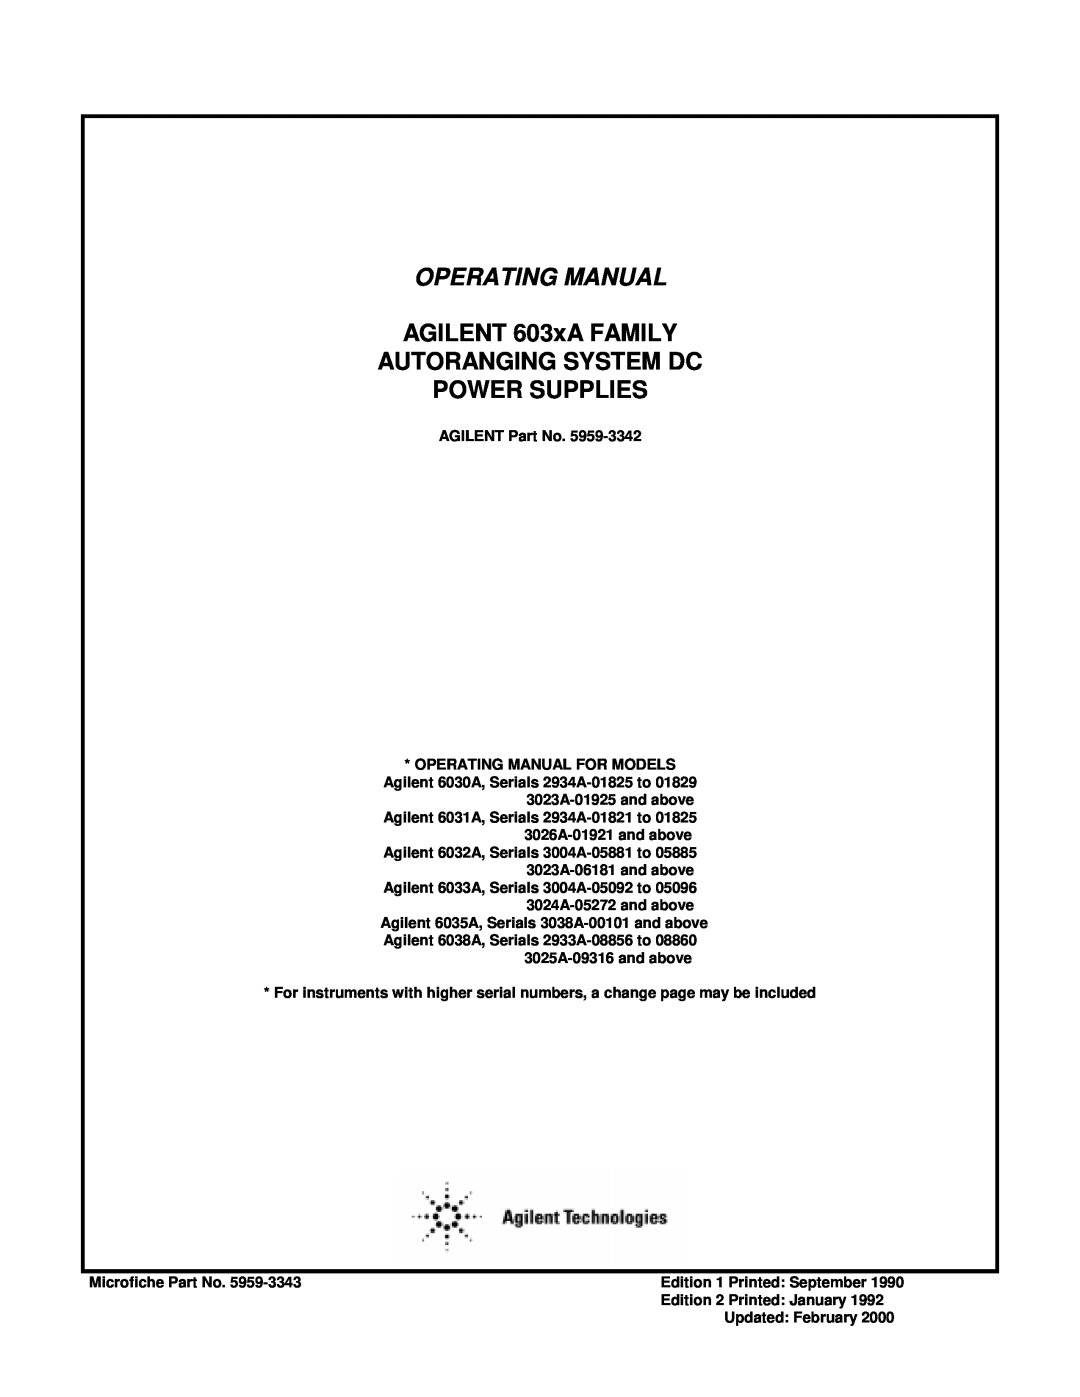 Agilent Technologies Agilent 6030A manual AGILENT 603xA FAMILY AUTORANGING SYSTEM DC POWER SUPPLIES, Operating Manual 